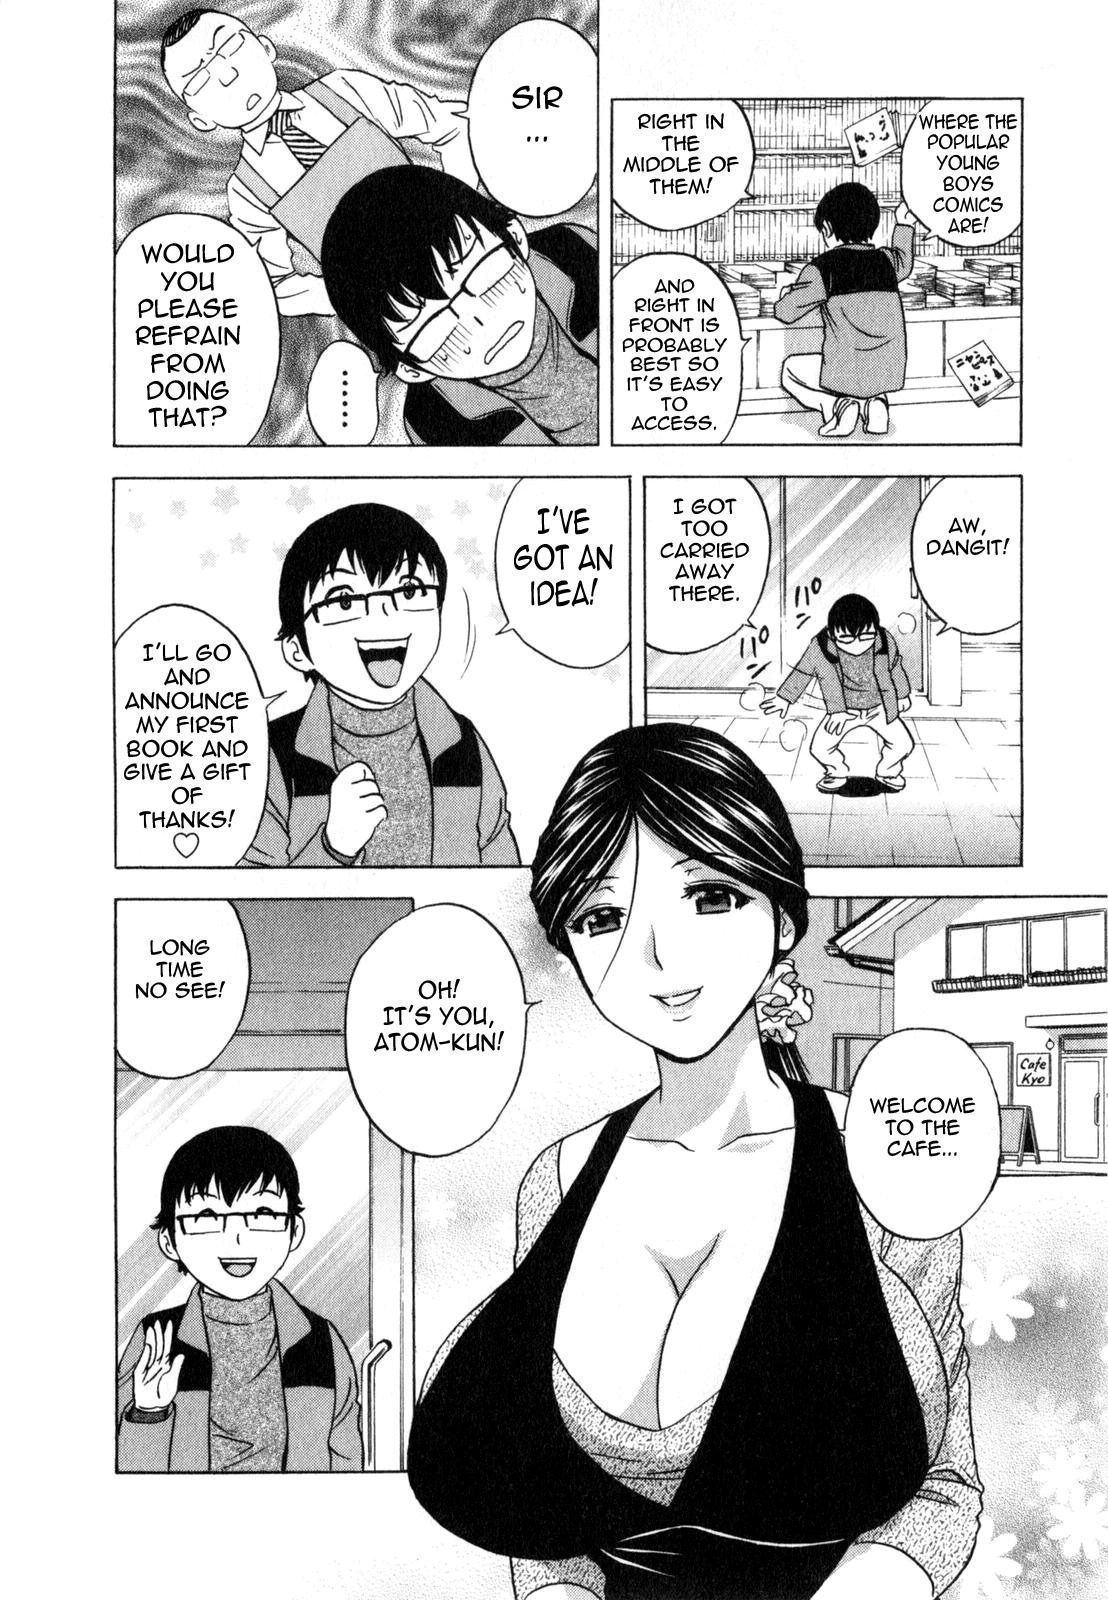 [Hidemaru] Life with Married Women Just Like a Manga 3 - Ch. 1-5 [English] {Tadanohito} 13